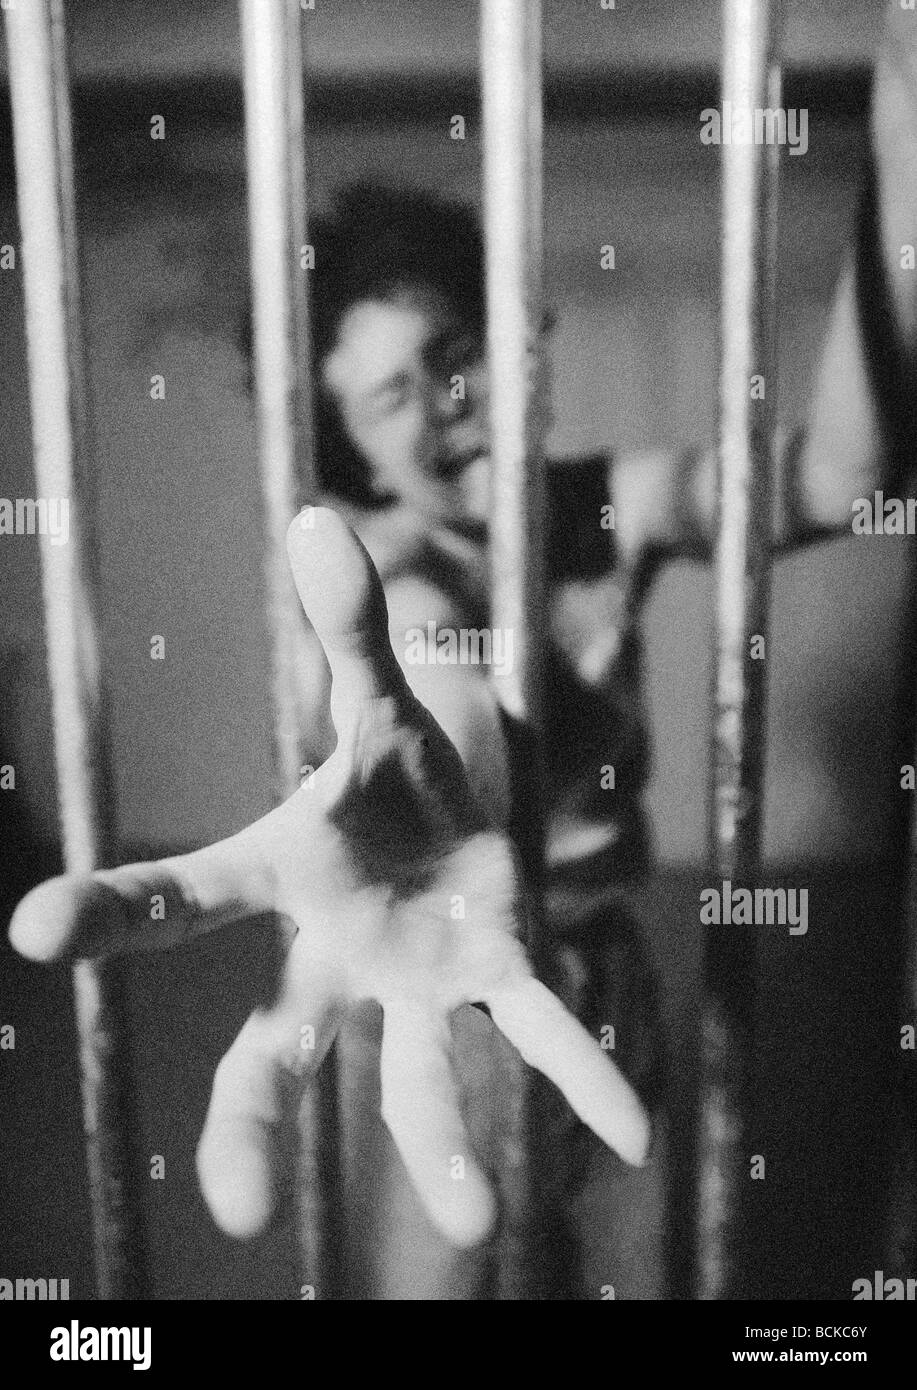 Woman behind prison bars reaching hand through bars, b&w Stock Photo